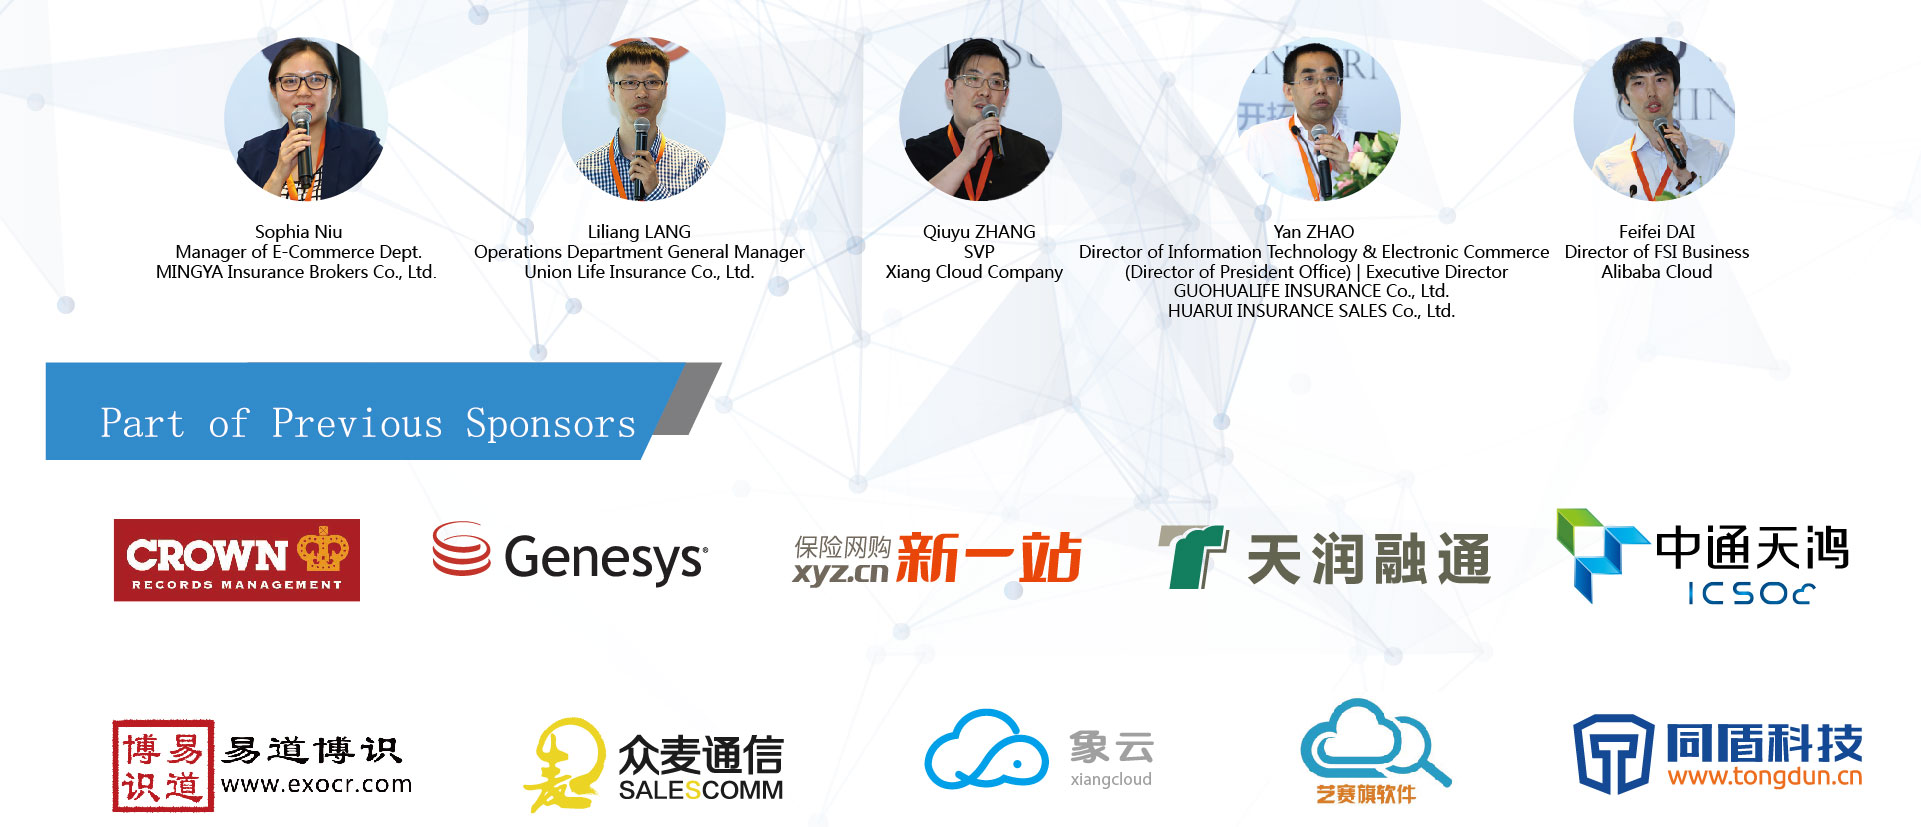 The 2nd China Internet Insurance Forum